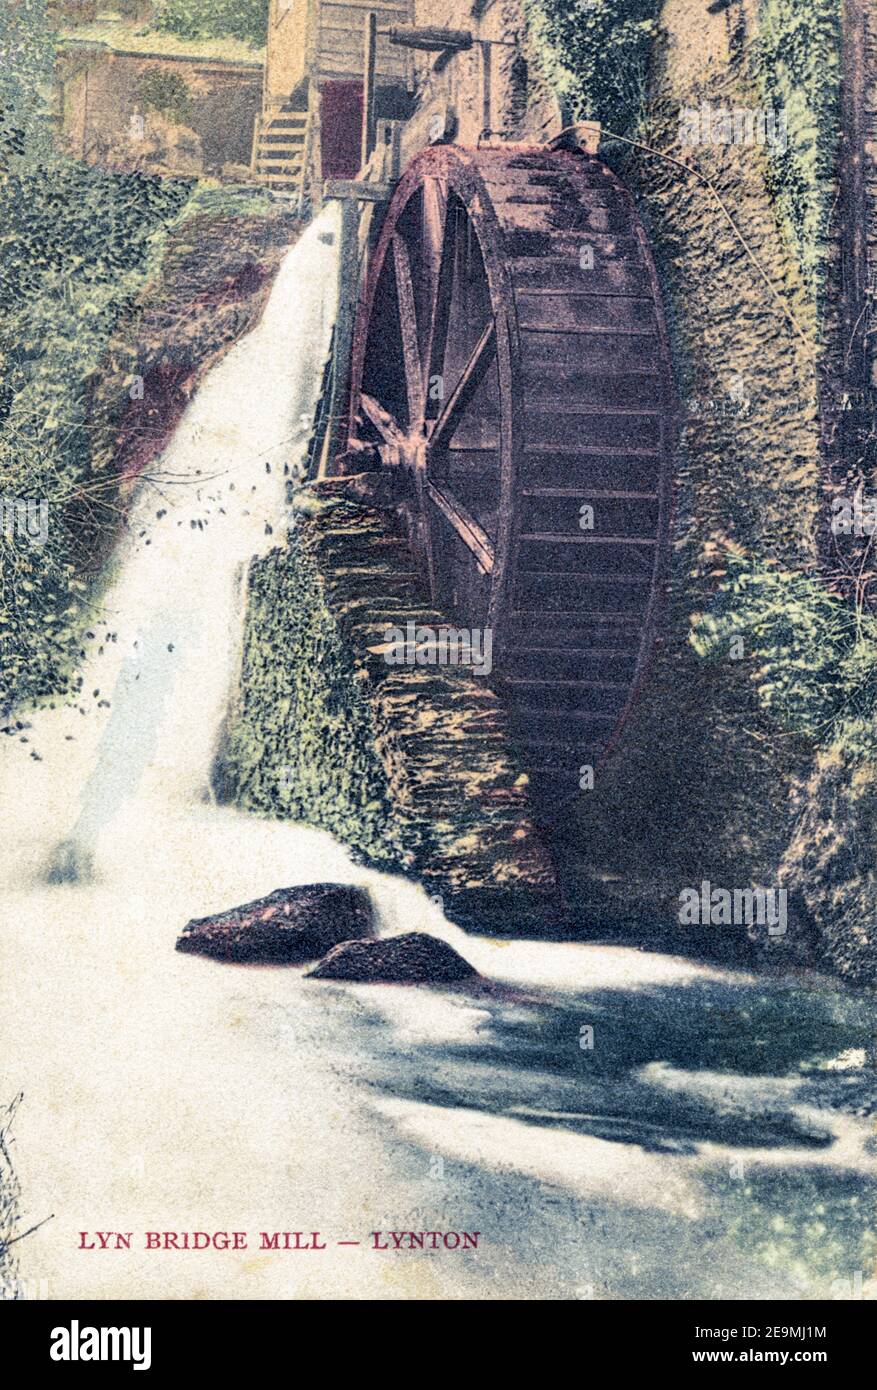 Eine farbige Postkarte von Lyn Bridge Mill, Lynton posted in 1905 Stockfoto